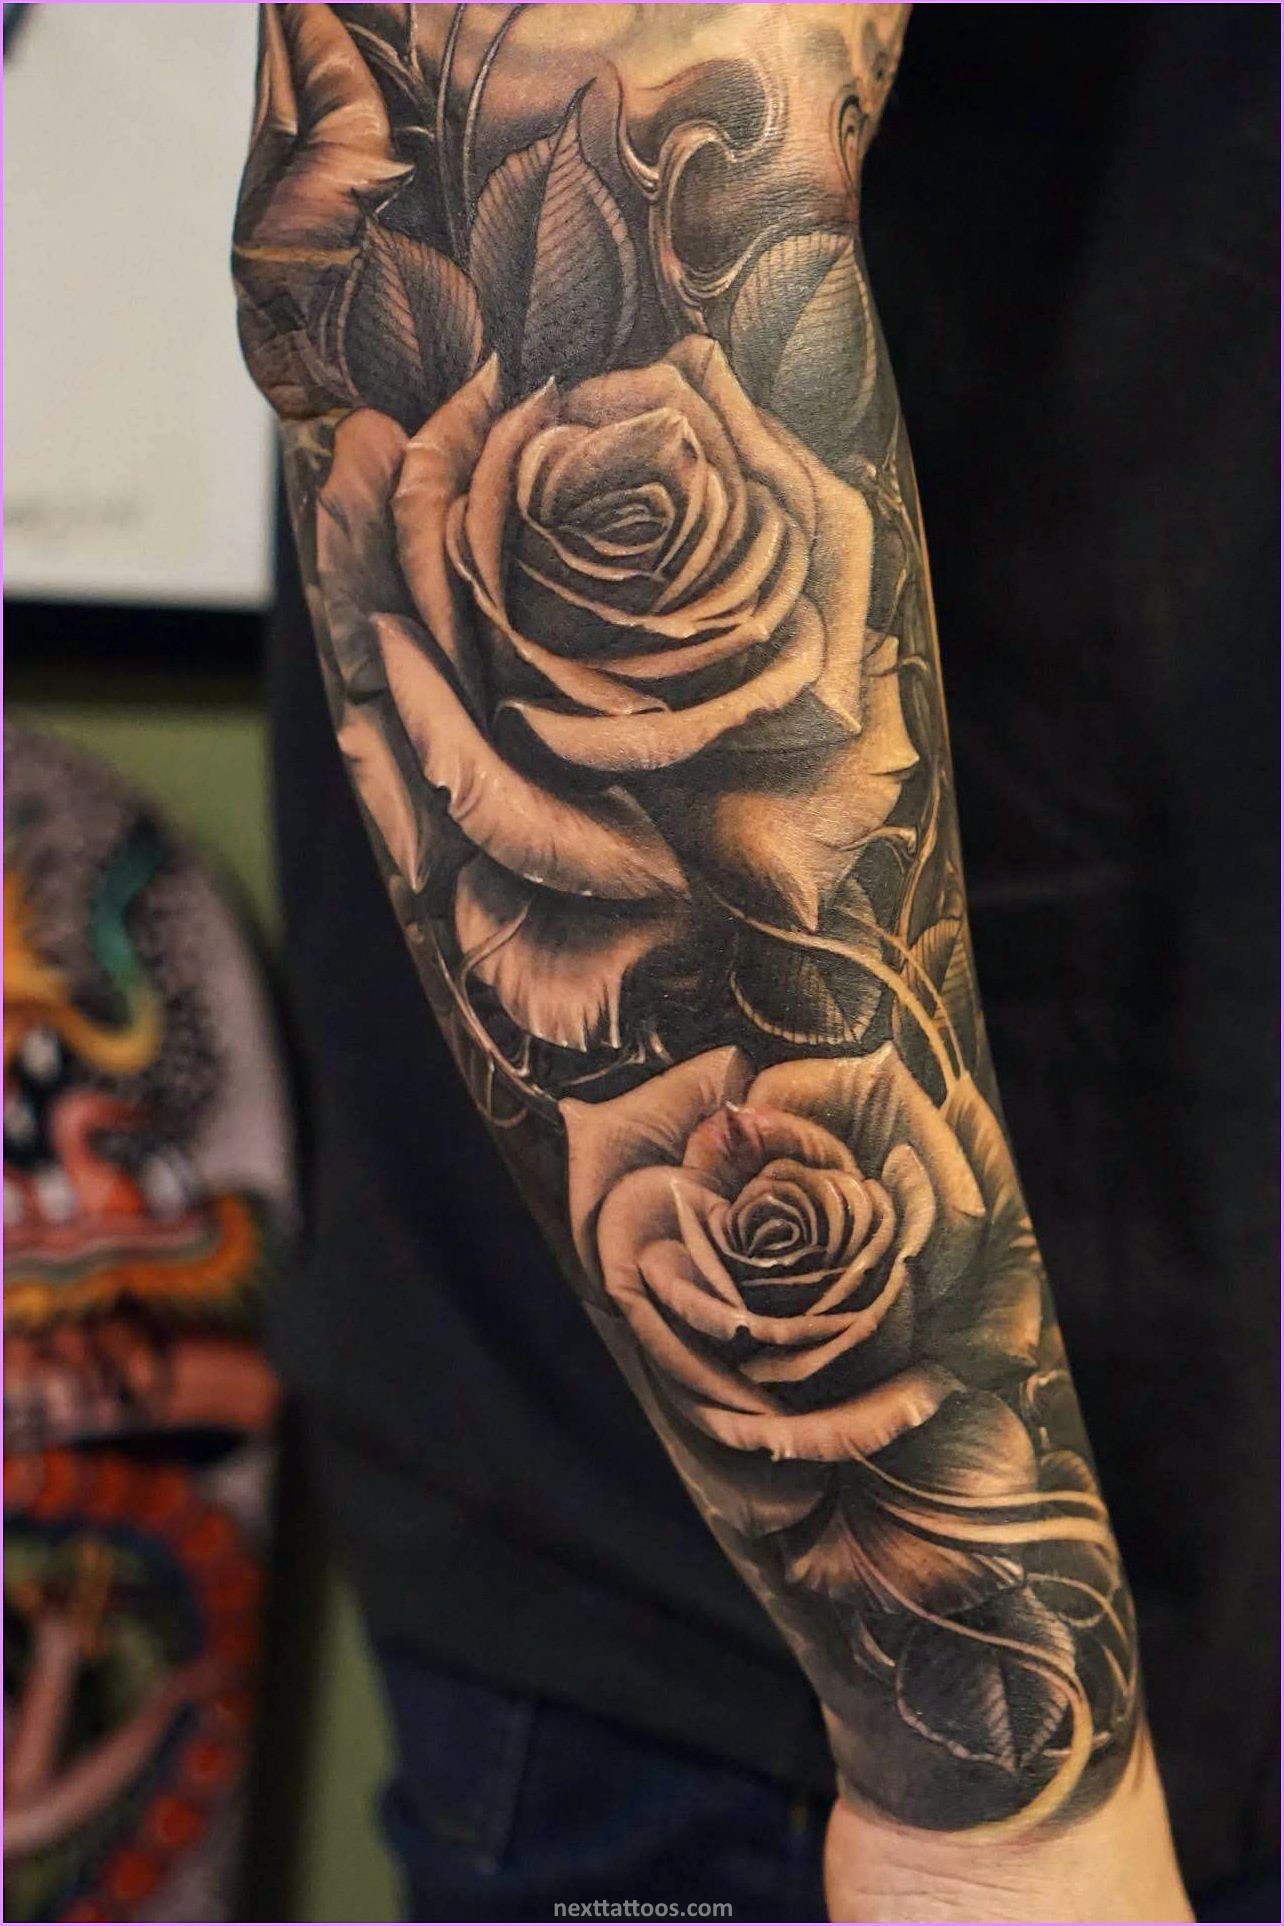 Rose Tattoo Ideas - Forearm, Arm, and Wrist